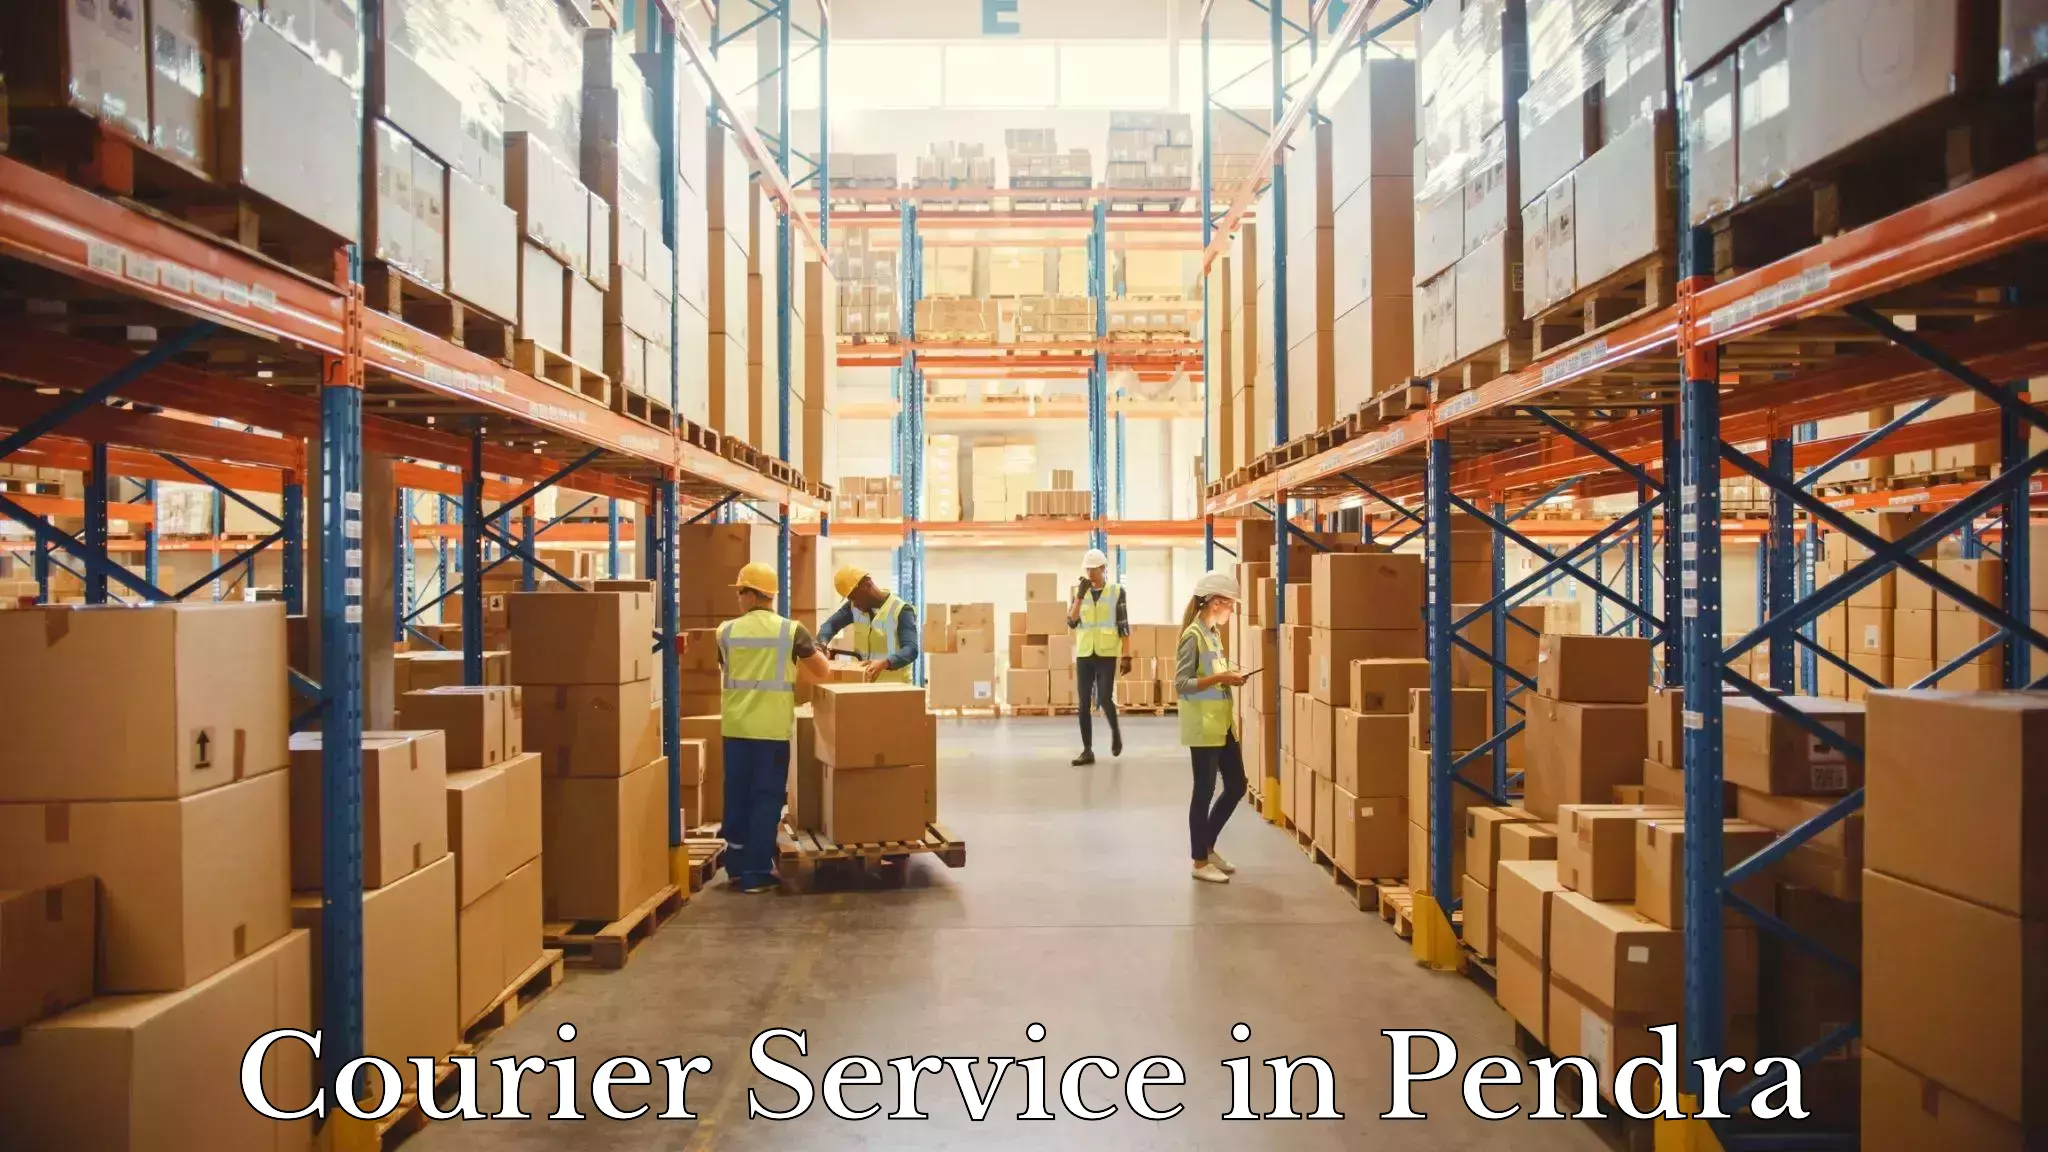 High-performance logistics in Pendra